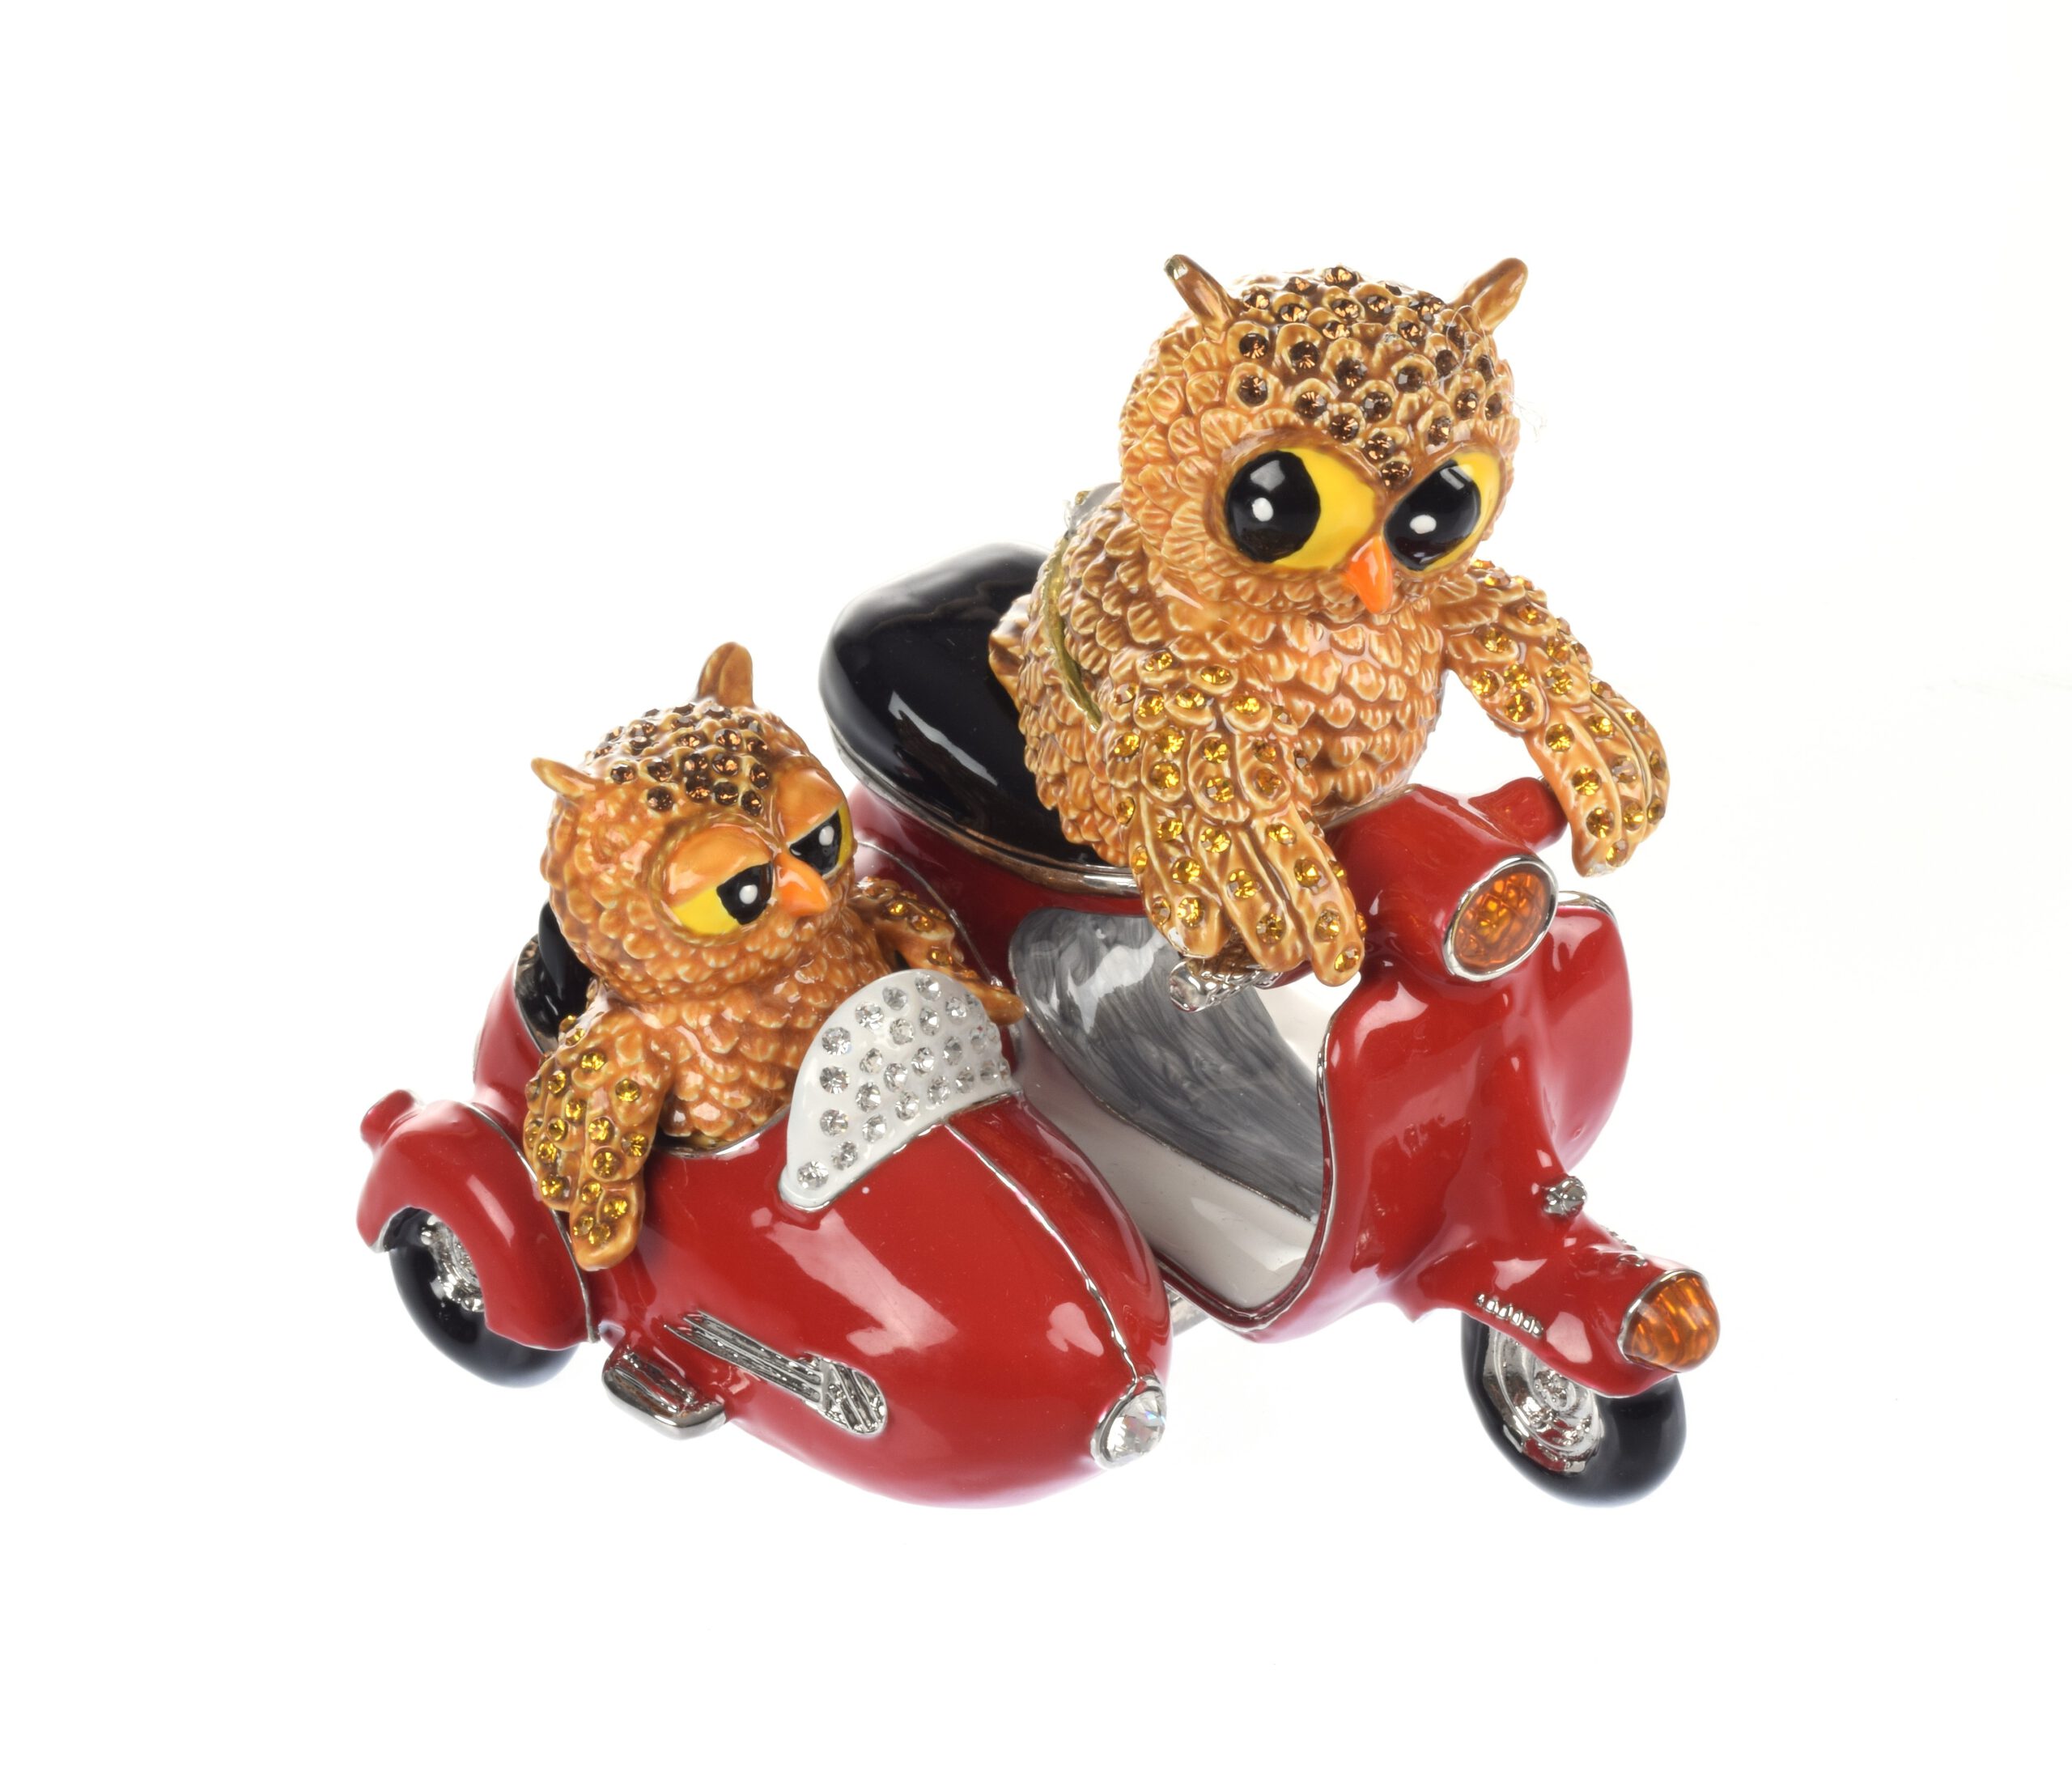 Owls on a Red Bike